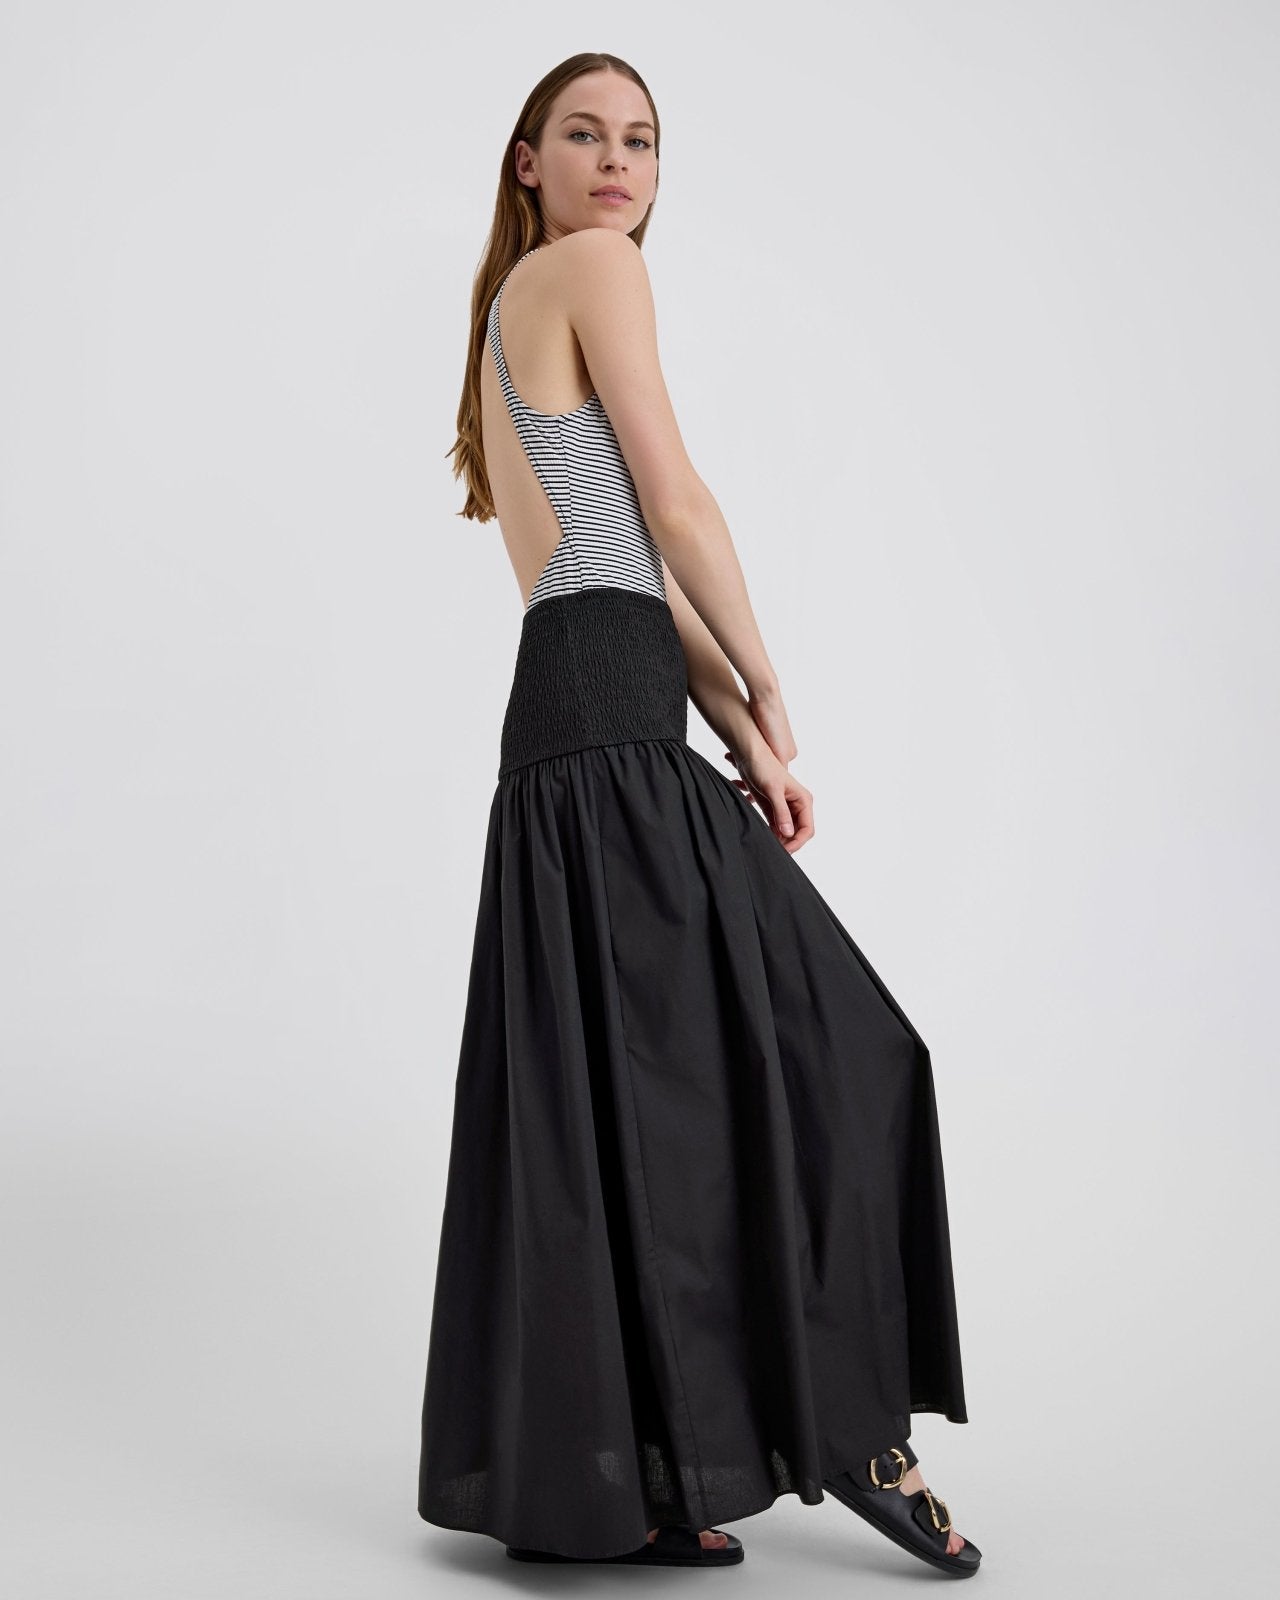 The Zaria Skirt